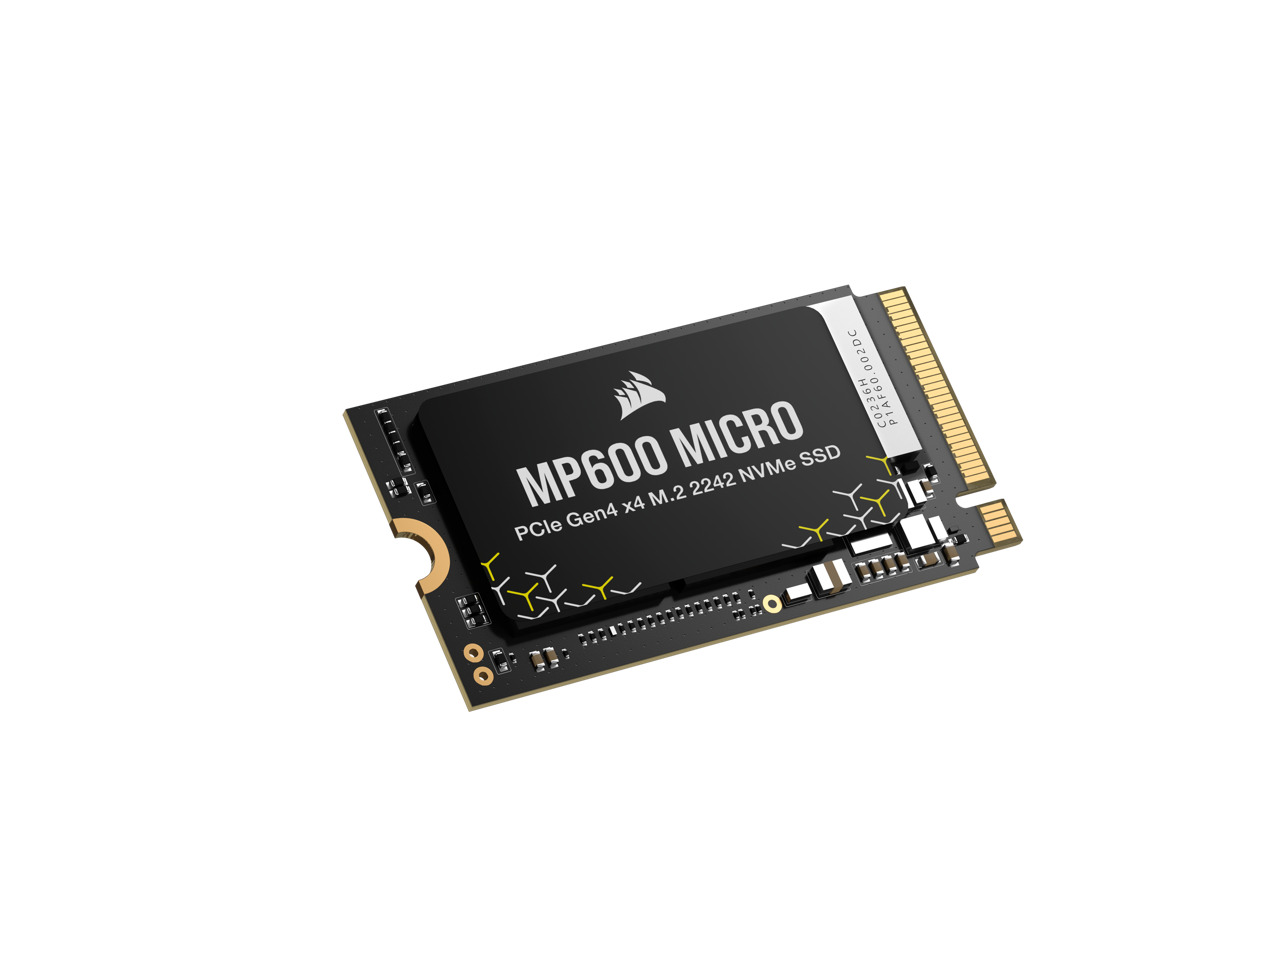 Corsair MP600 MICRO 1TB M.2 2242 key M SSD single sided PCIe Gen 4.0 x4 Drive